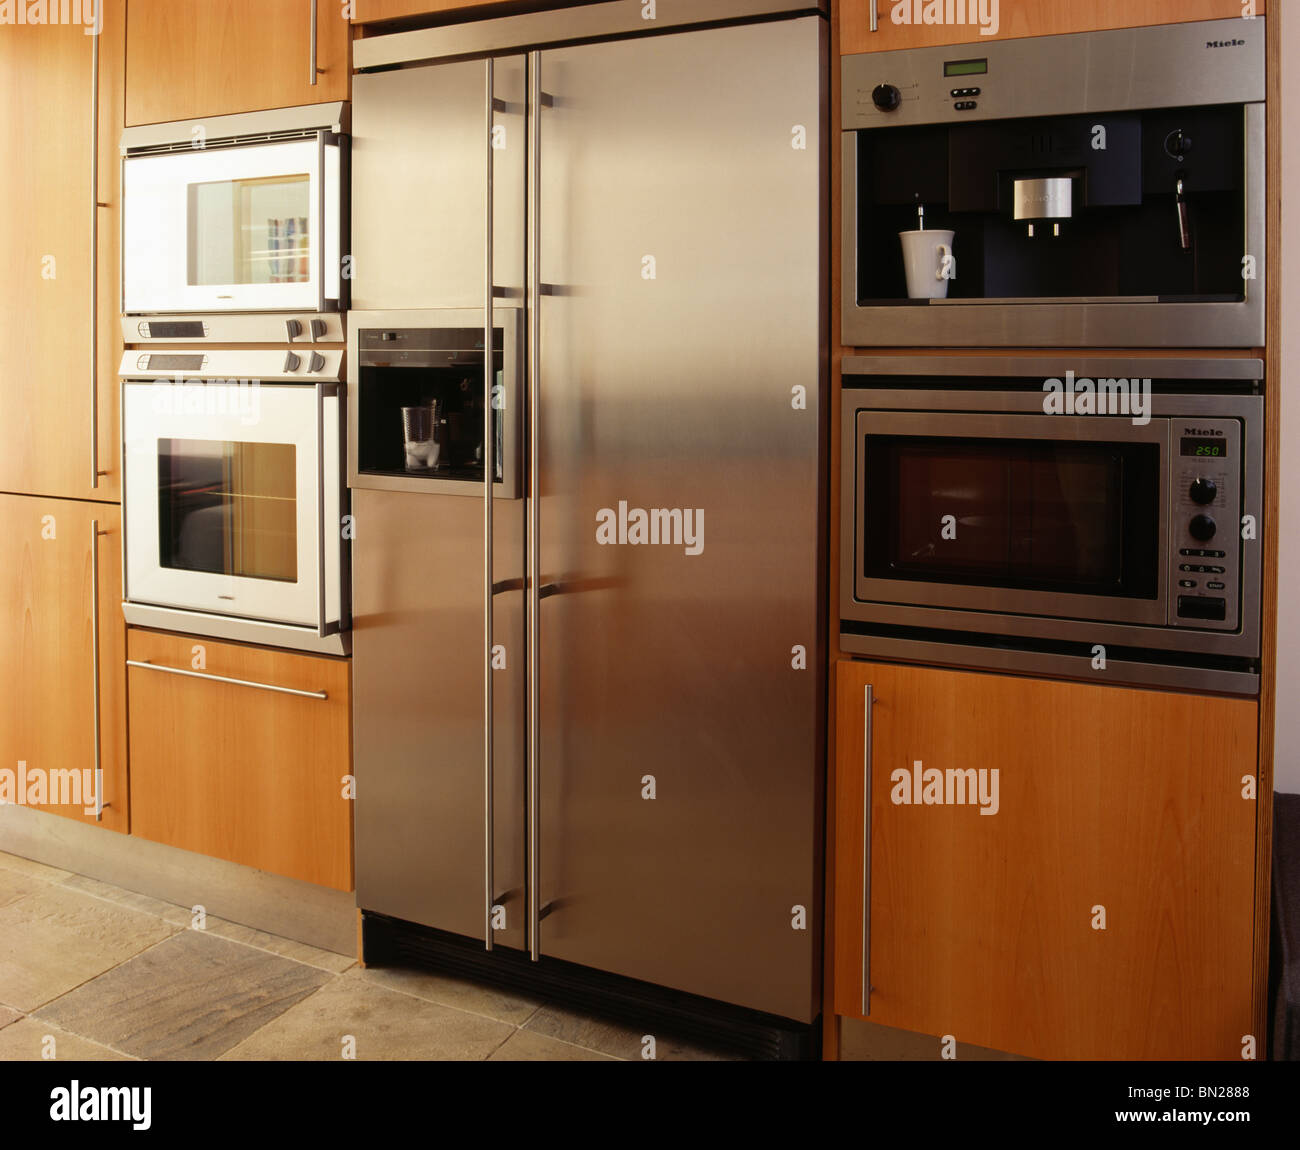 Interiores cocinas neveras neveras fotografías e imágenes de alta  resolución - Alamy